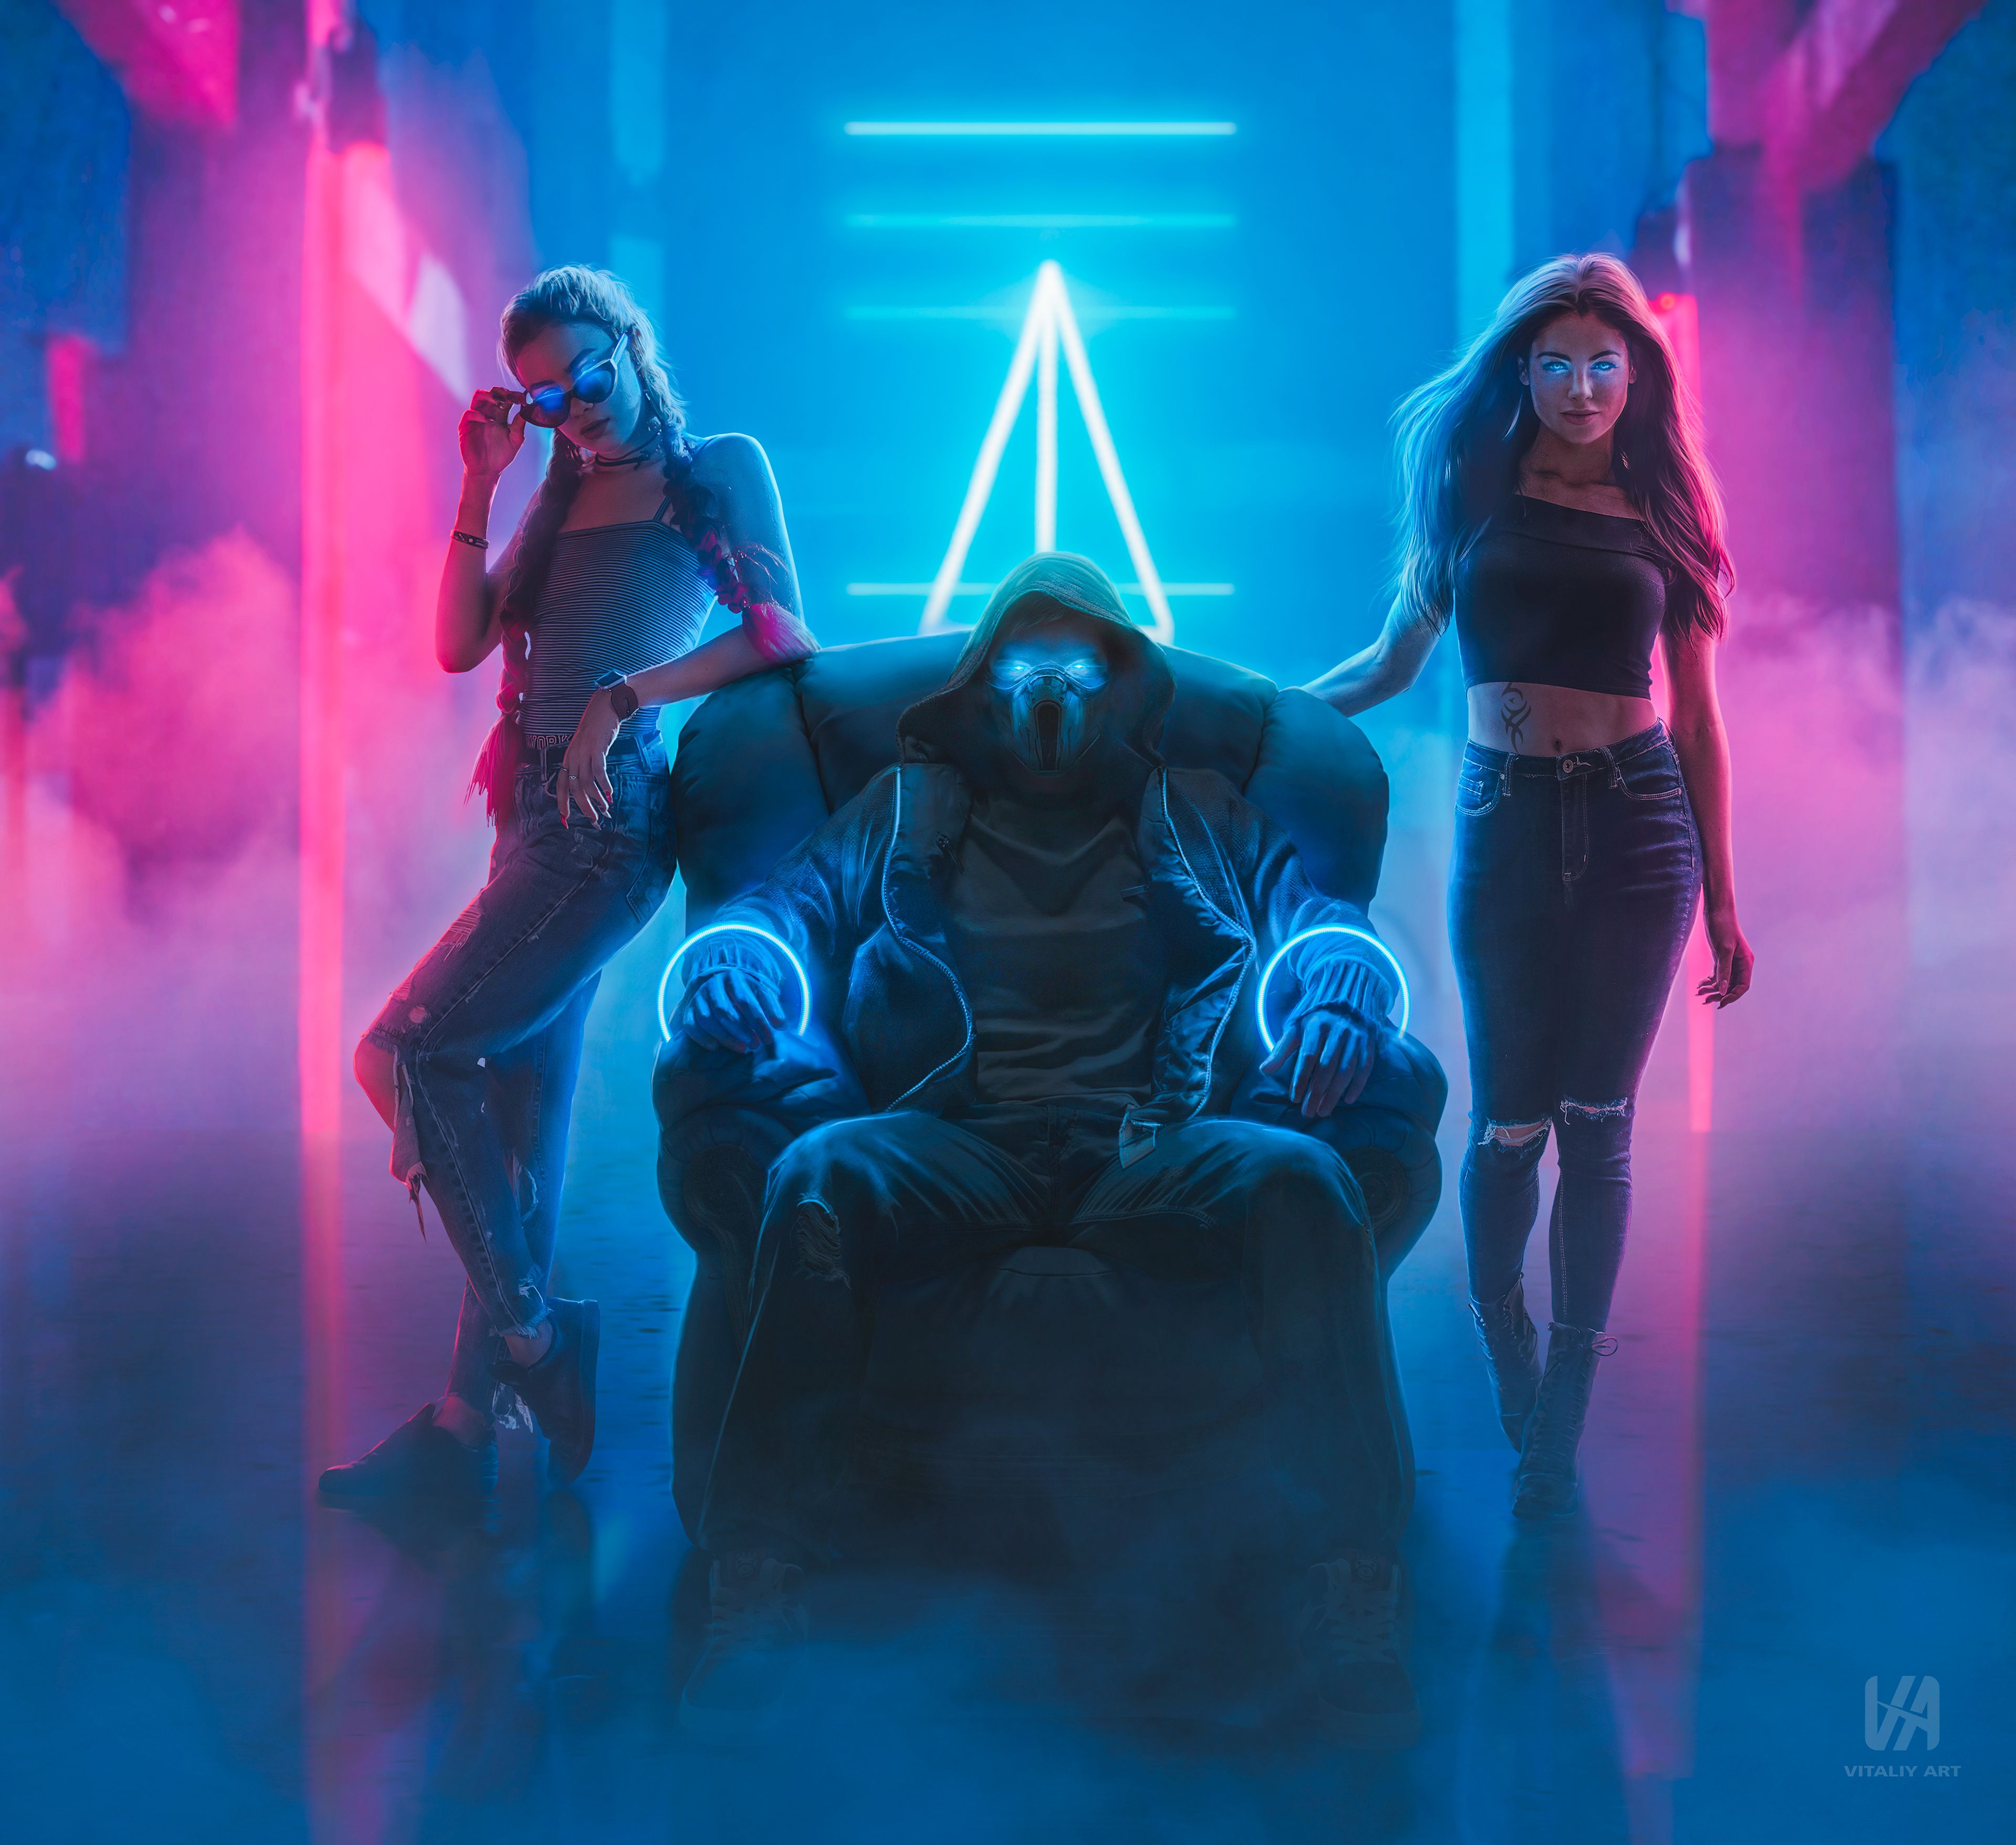 Bad boy 4K Wallpaper, Bad girls, Neon light, Night club, Mask, Cyberpunk, Digital Art, Graphics CGI